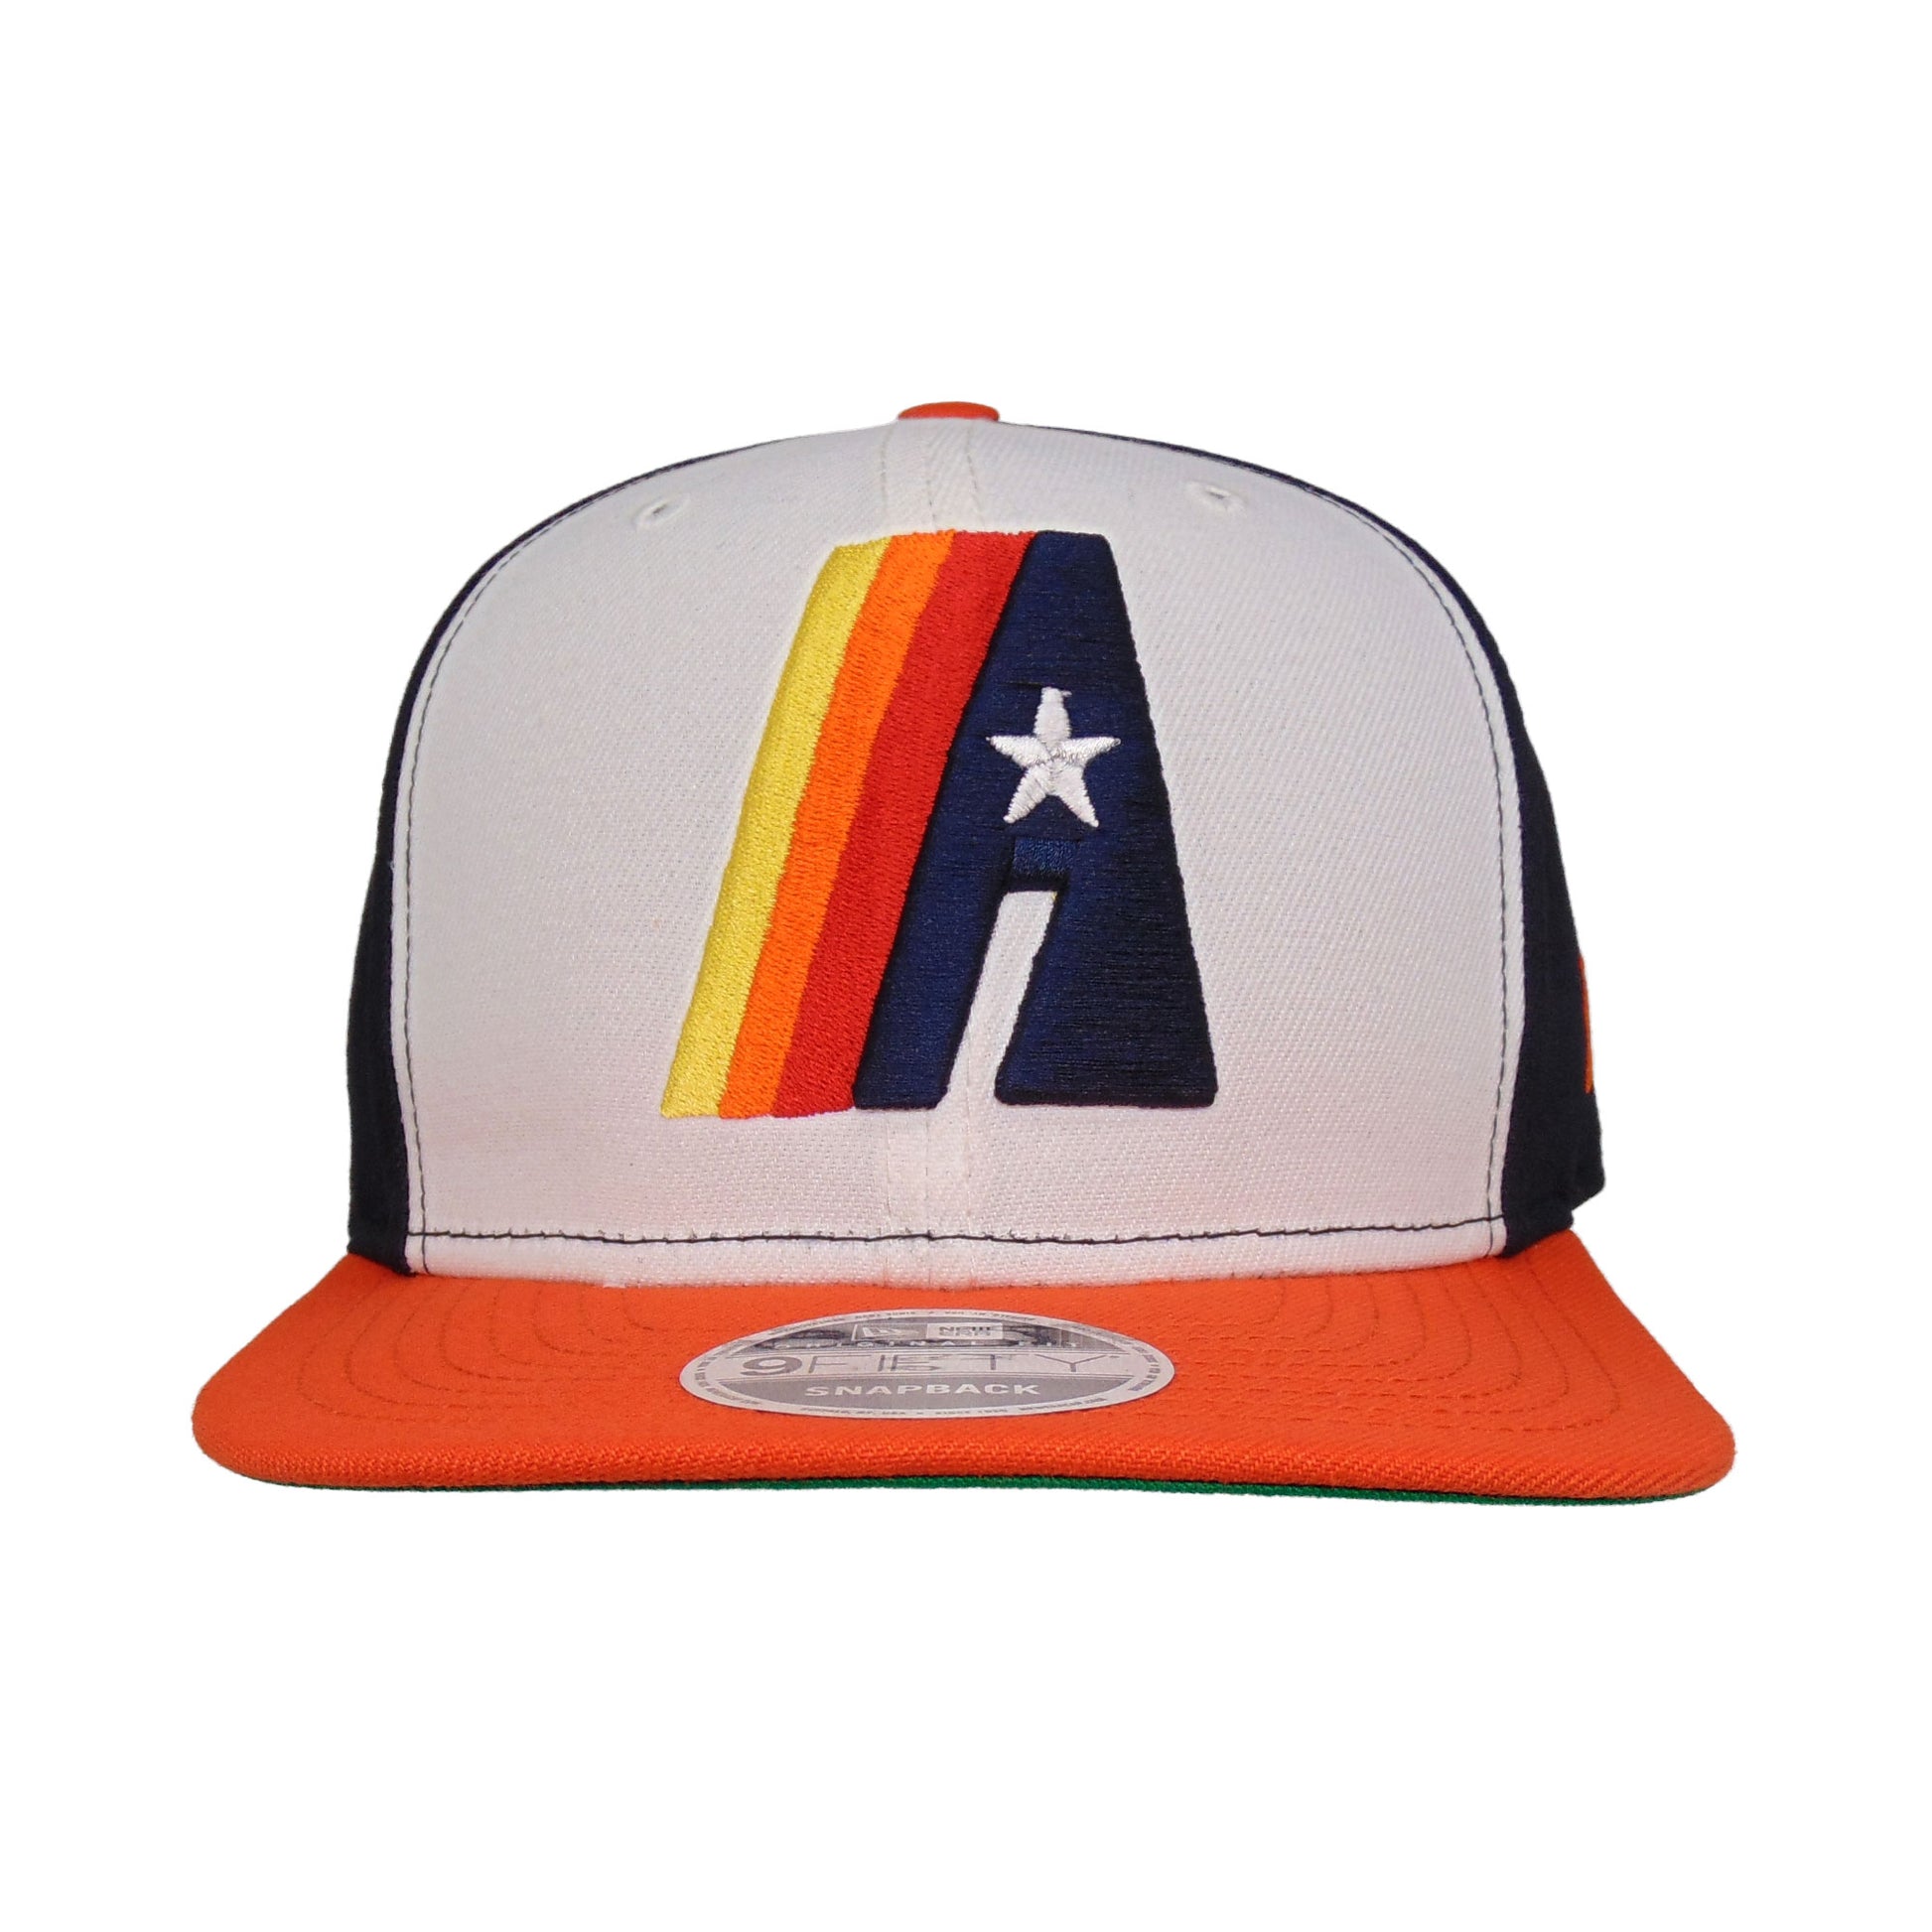 custom astros hat